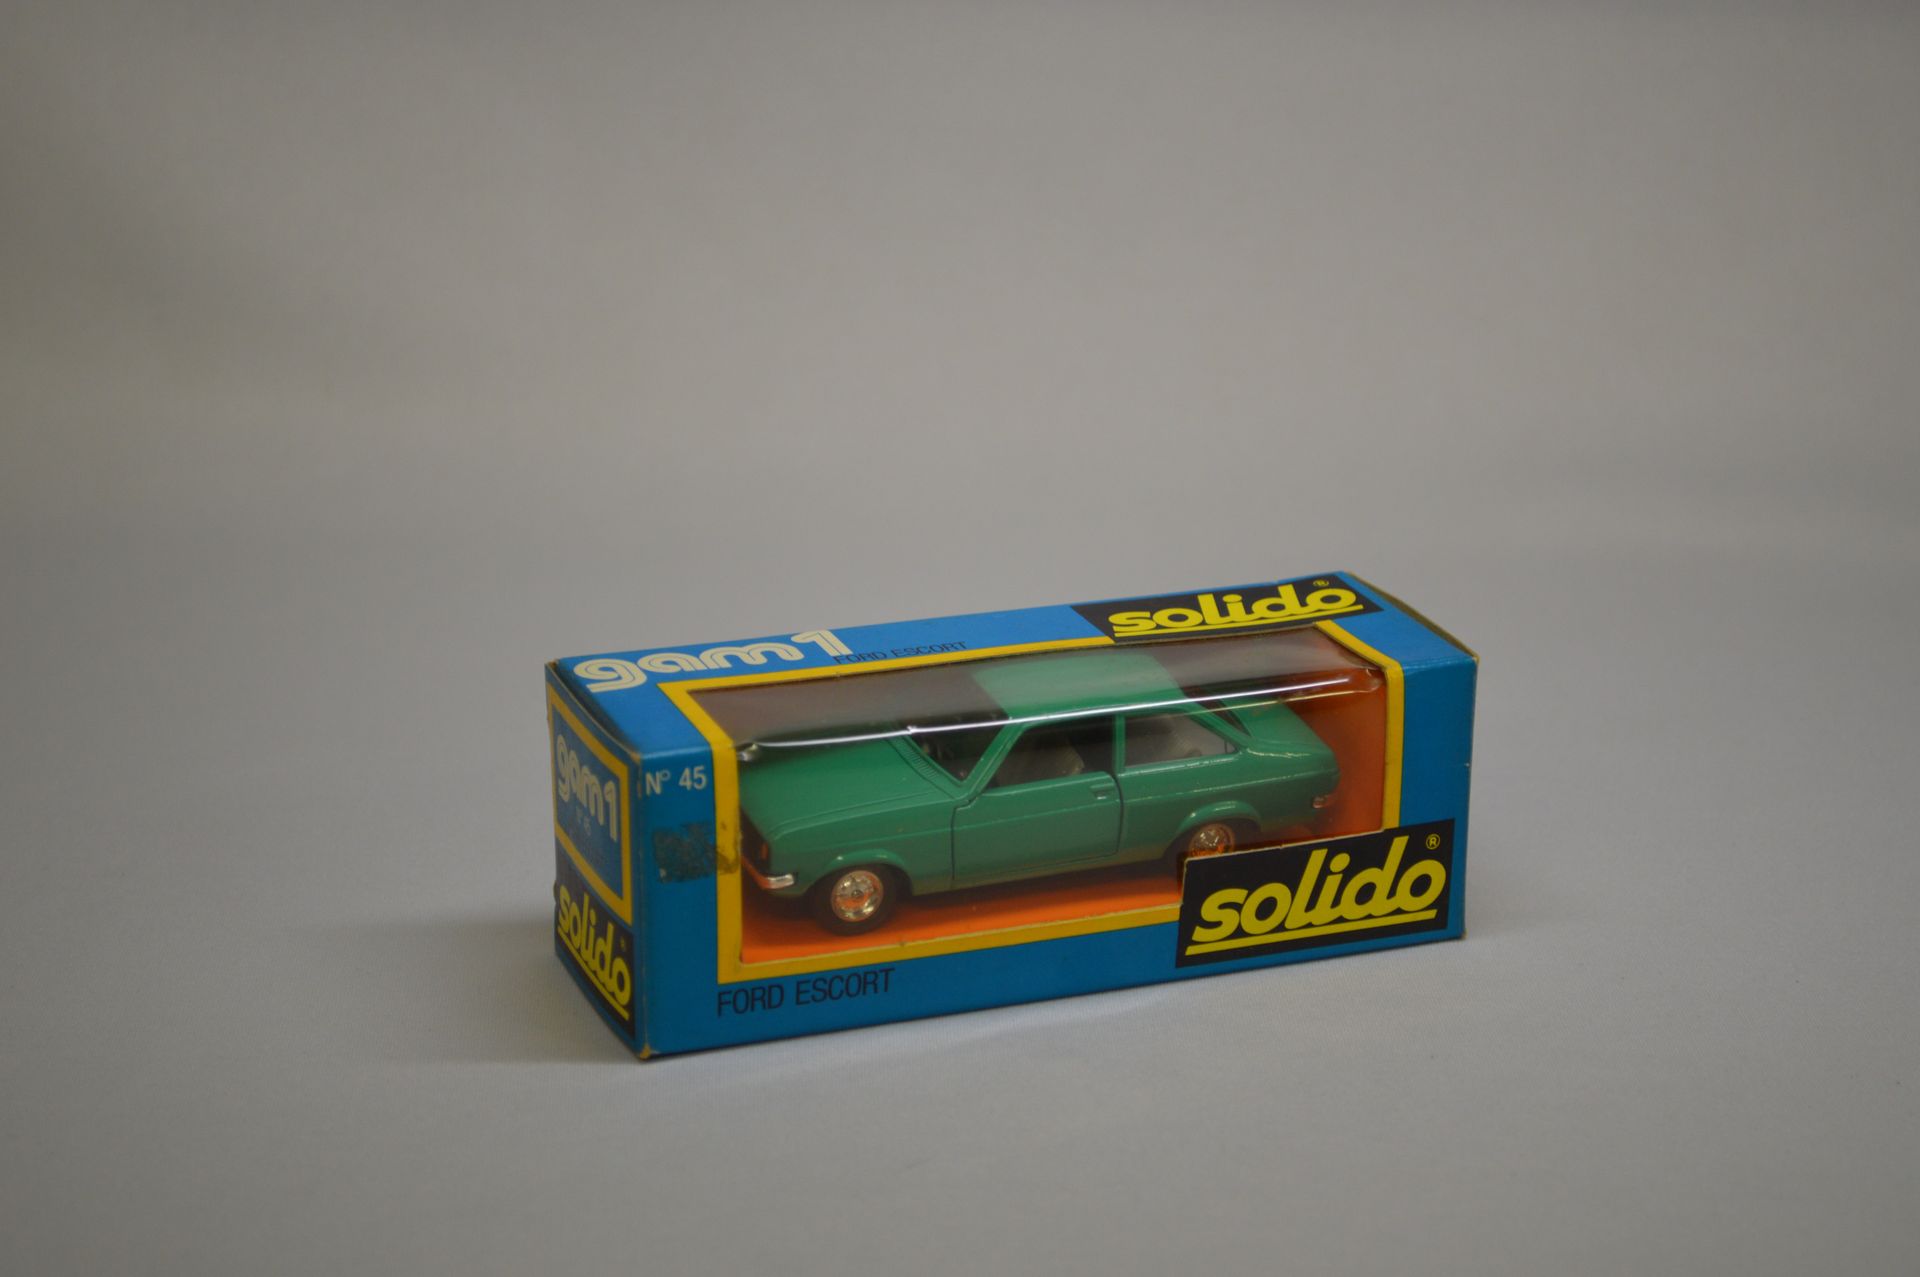 Null SOLIDO - GAM 1 - Auto da turismo: Ford Escort, n° 45, verde.

Scatola origi&hellip;